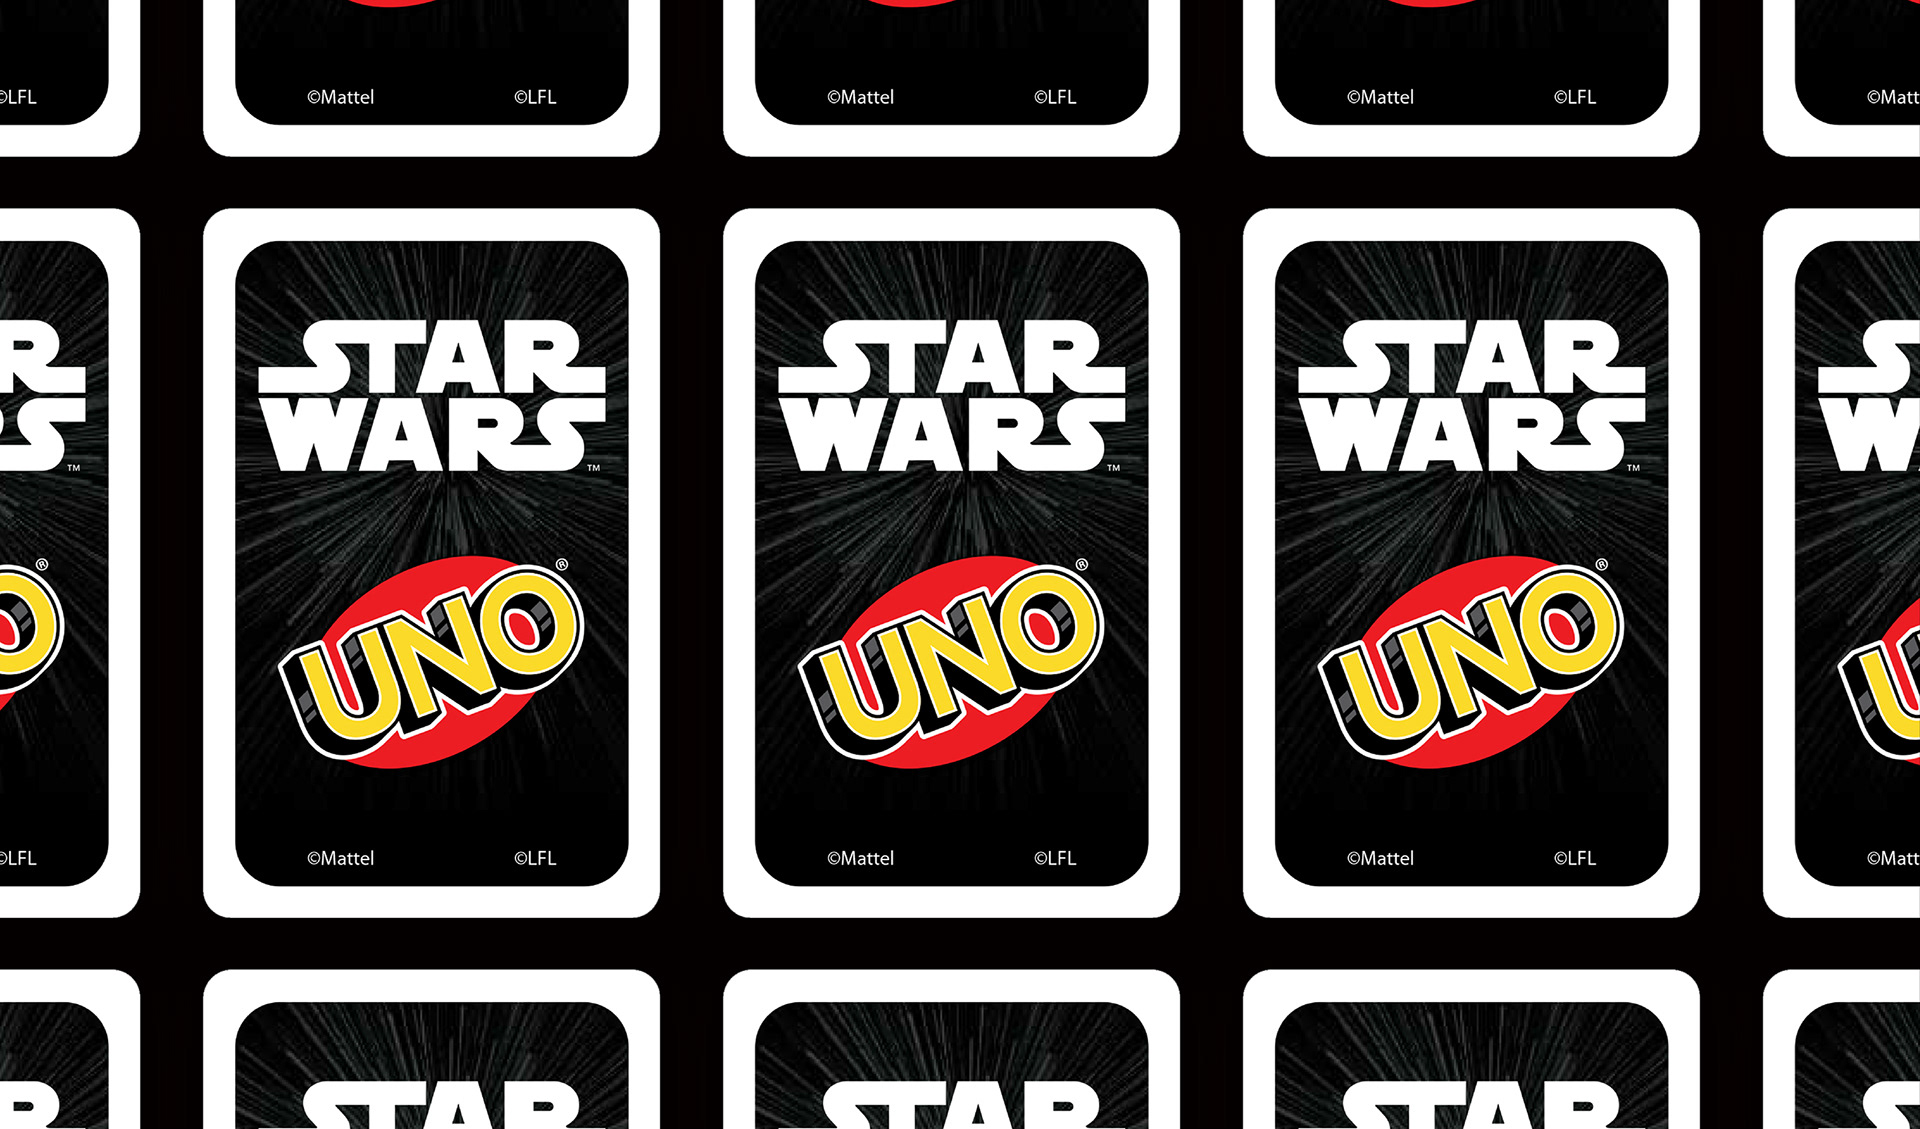 Star Wars UNO Cards by Jane Gardner on Dribbble